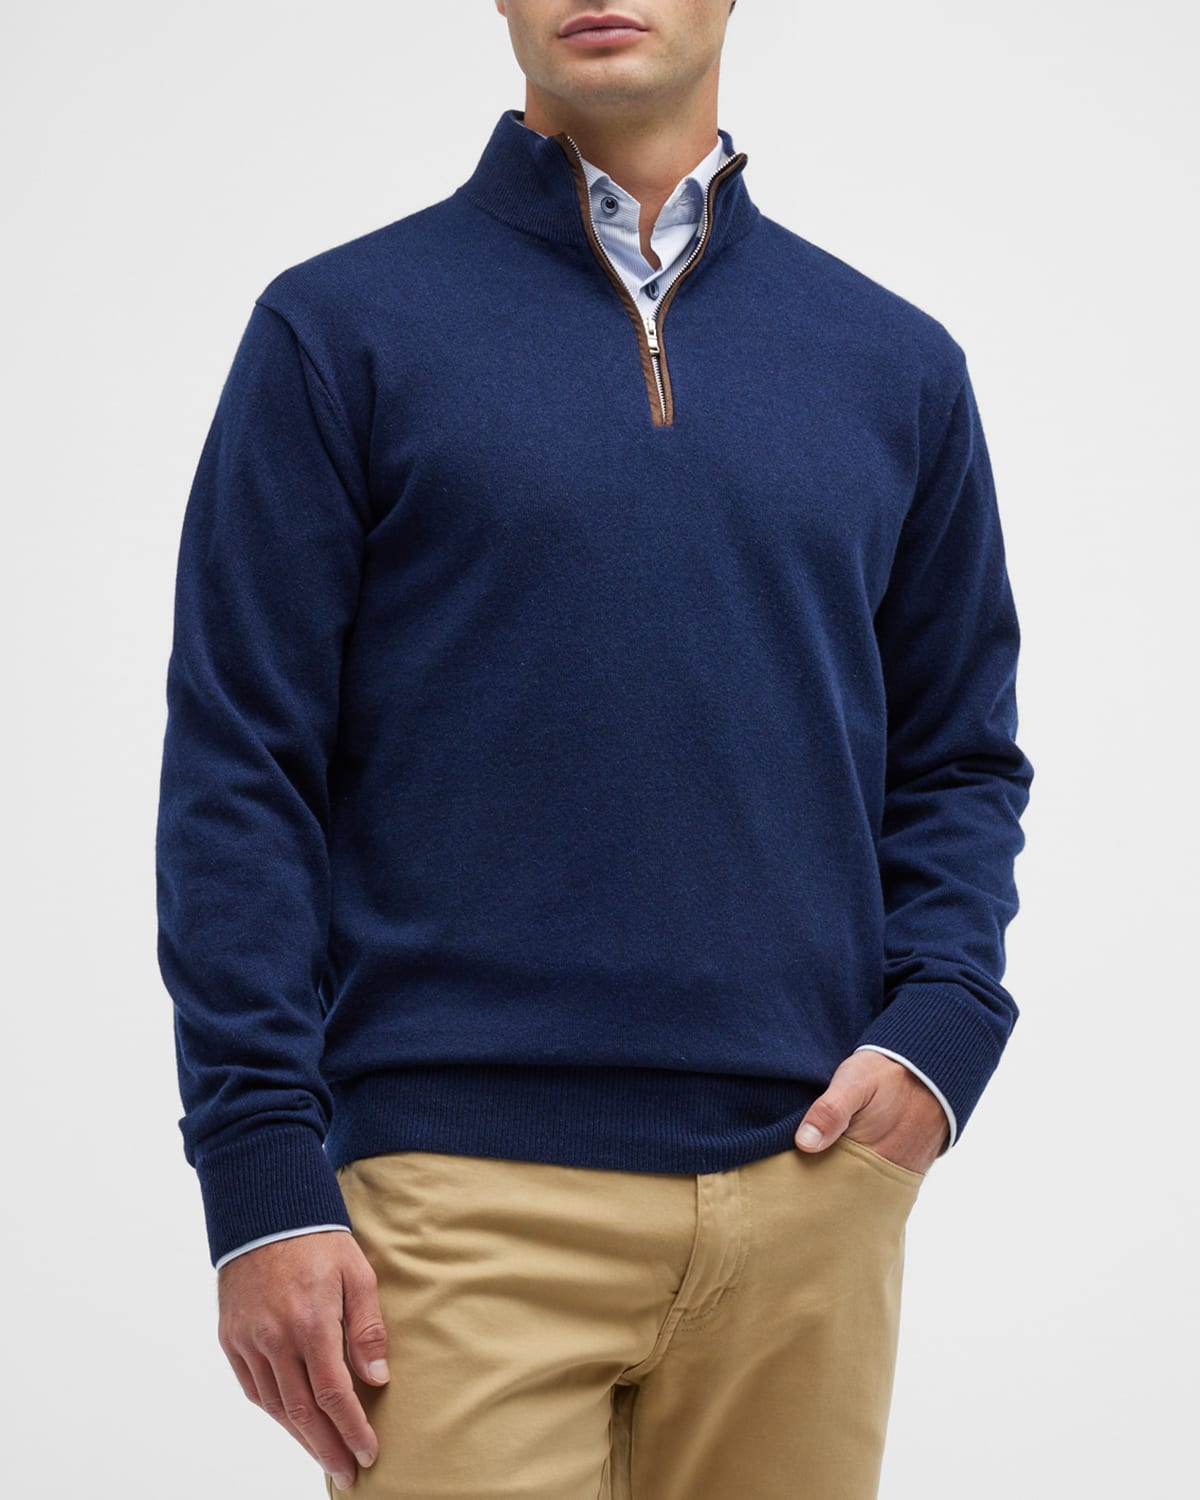 Peter Millar Men's Stretch Cashmere Quarter-Zip Sweater